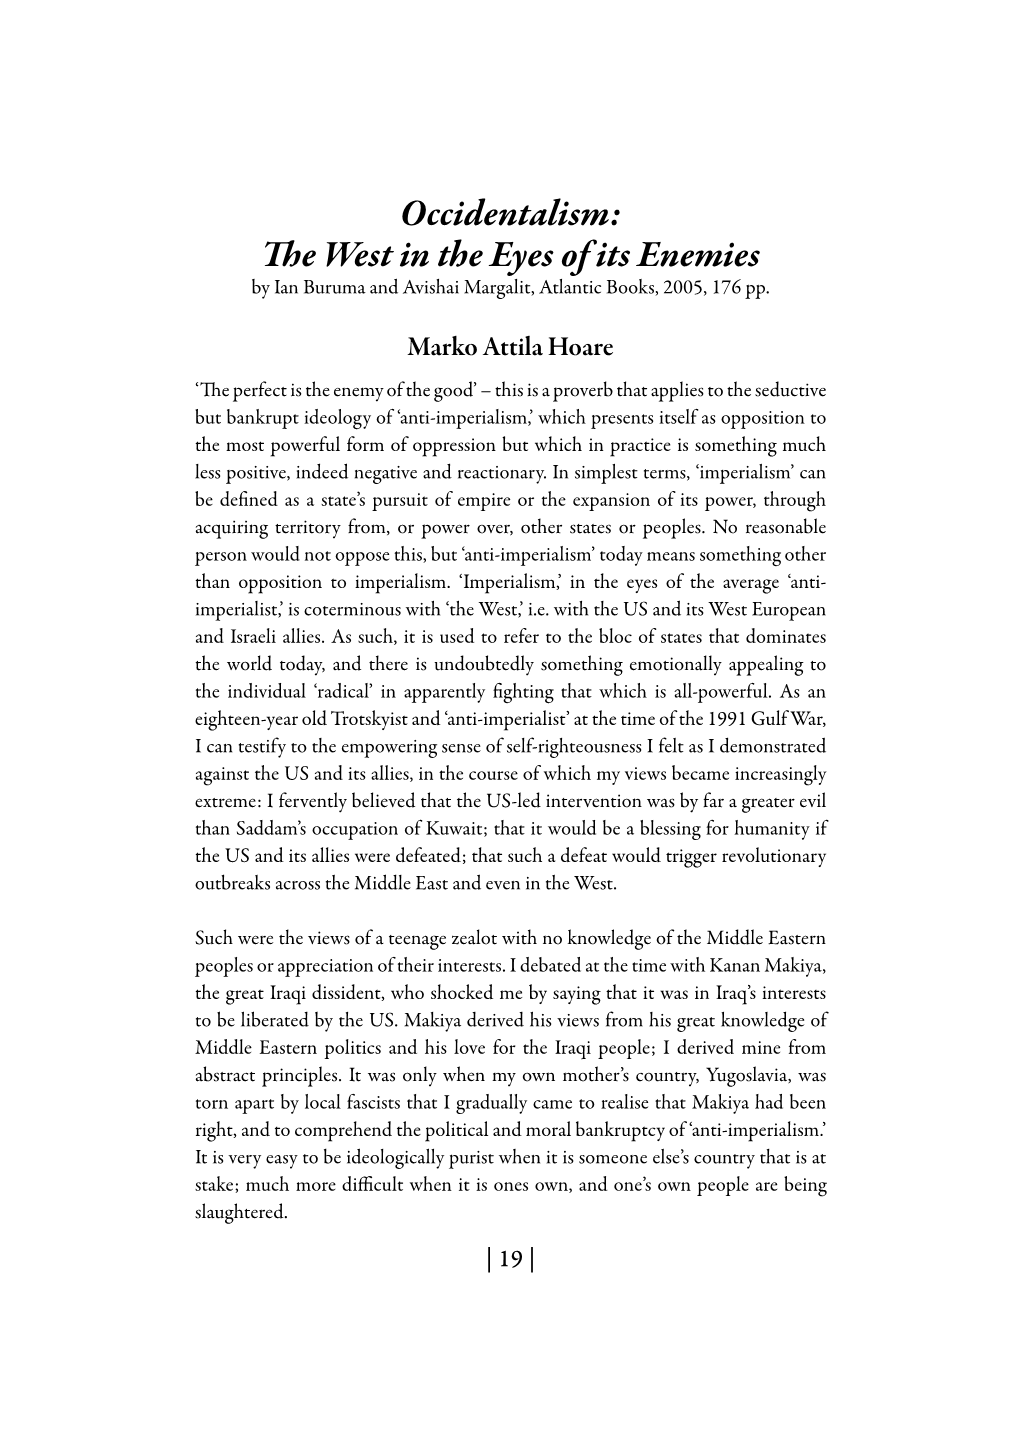 Occidentalism: the West in the Eyes of Its Enemies by Ian Buruma and Avishai Margalit, Atlantic Books, 2005, 176 Pp